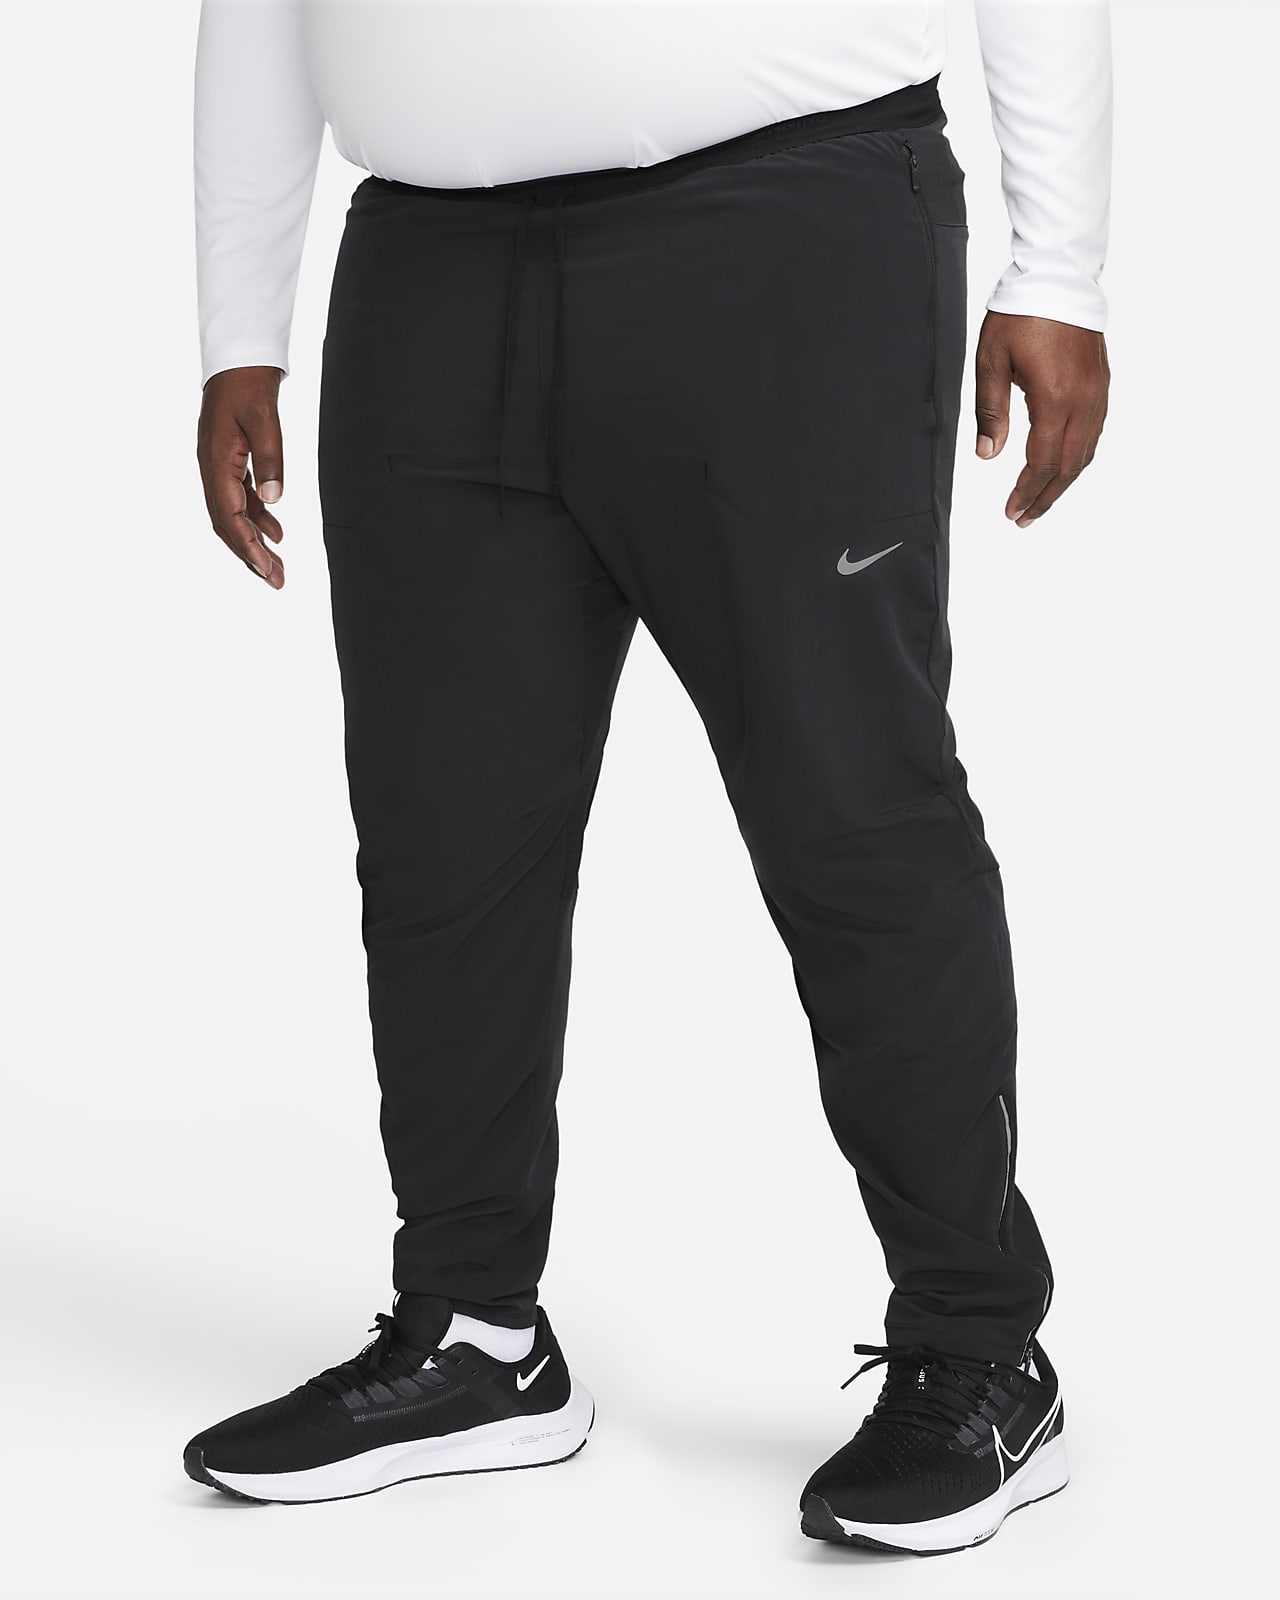 Nike Phenom Reflective RUNNING TRAINING Pants Trousers Tights AA0690 036 XL  $130 | eBay